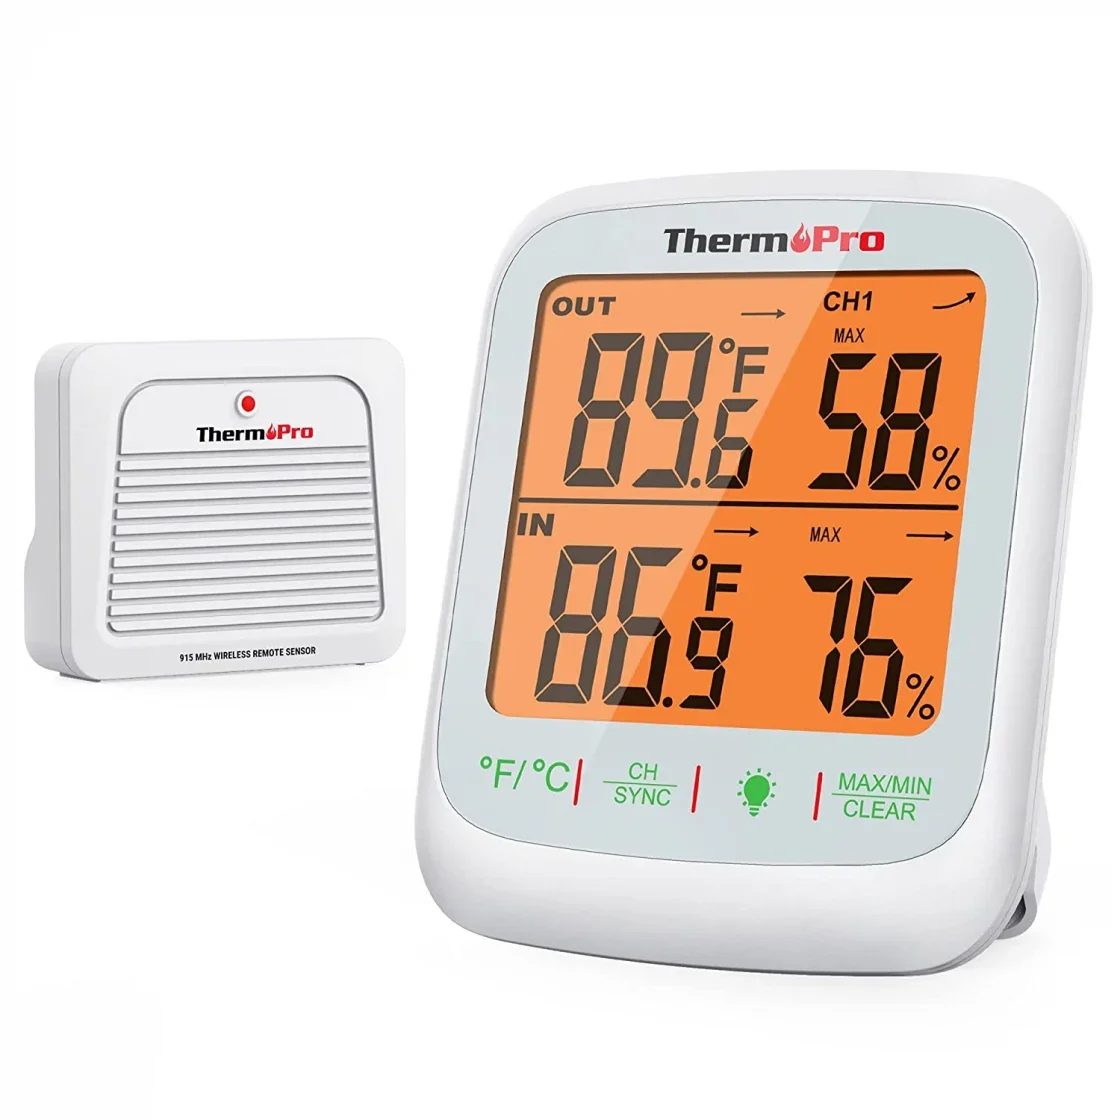 ThermoPro: Introducing the ultra-long-range TP260B Temp & Humidity